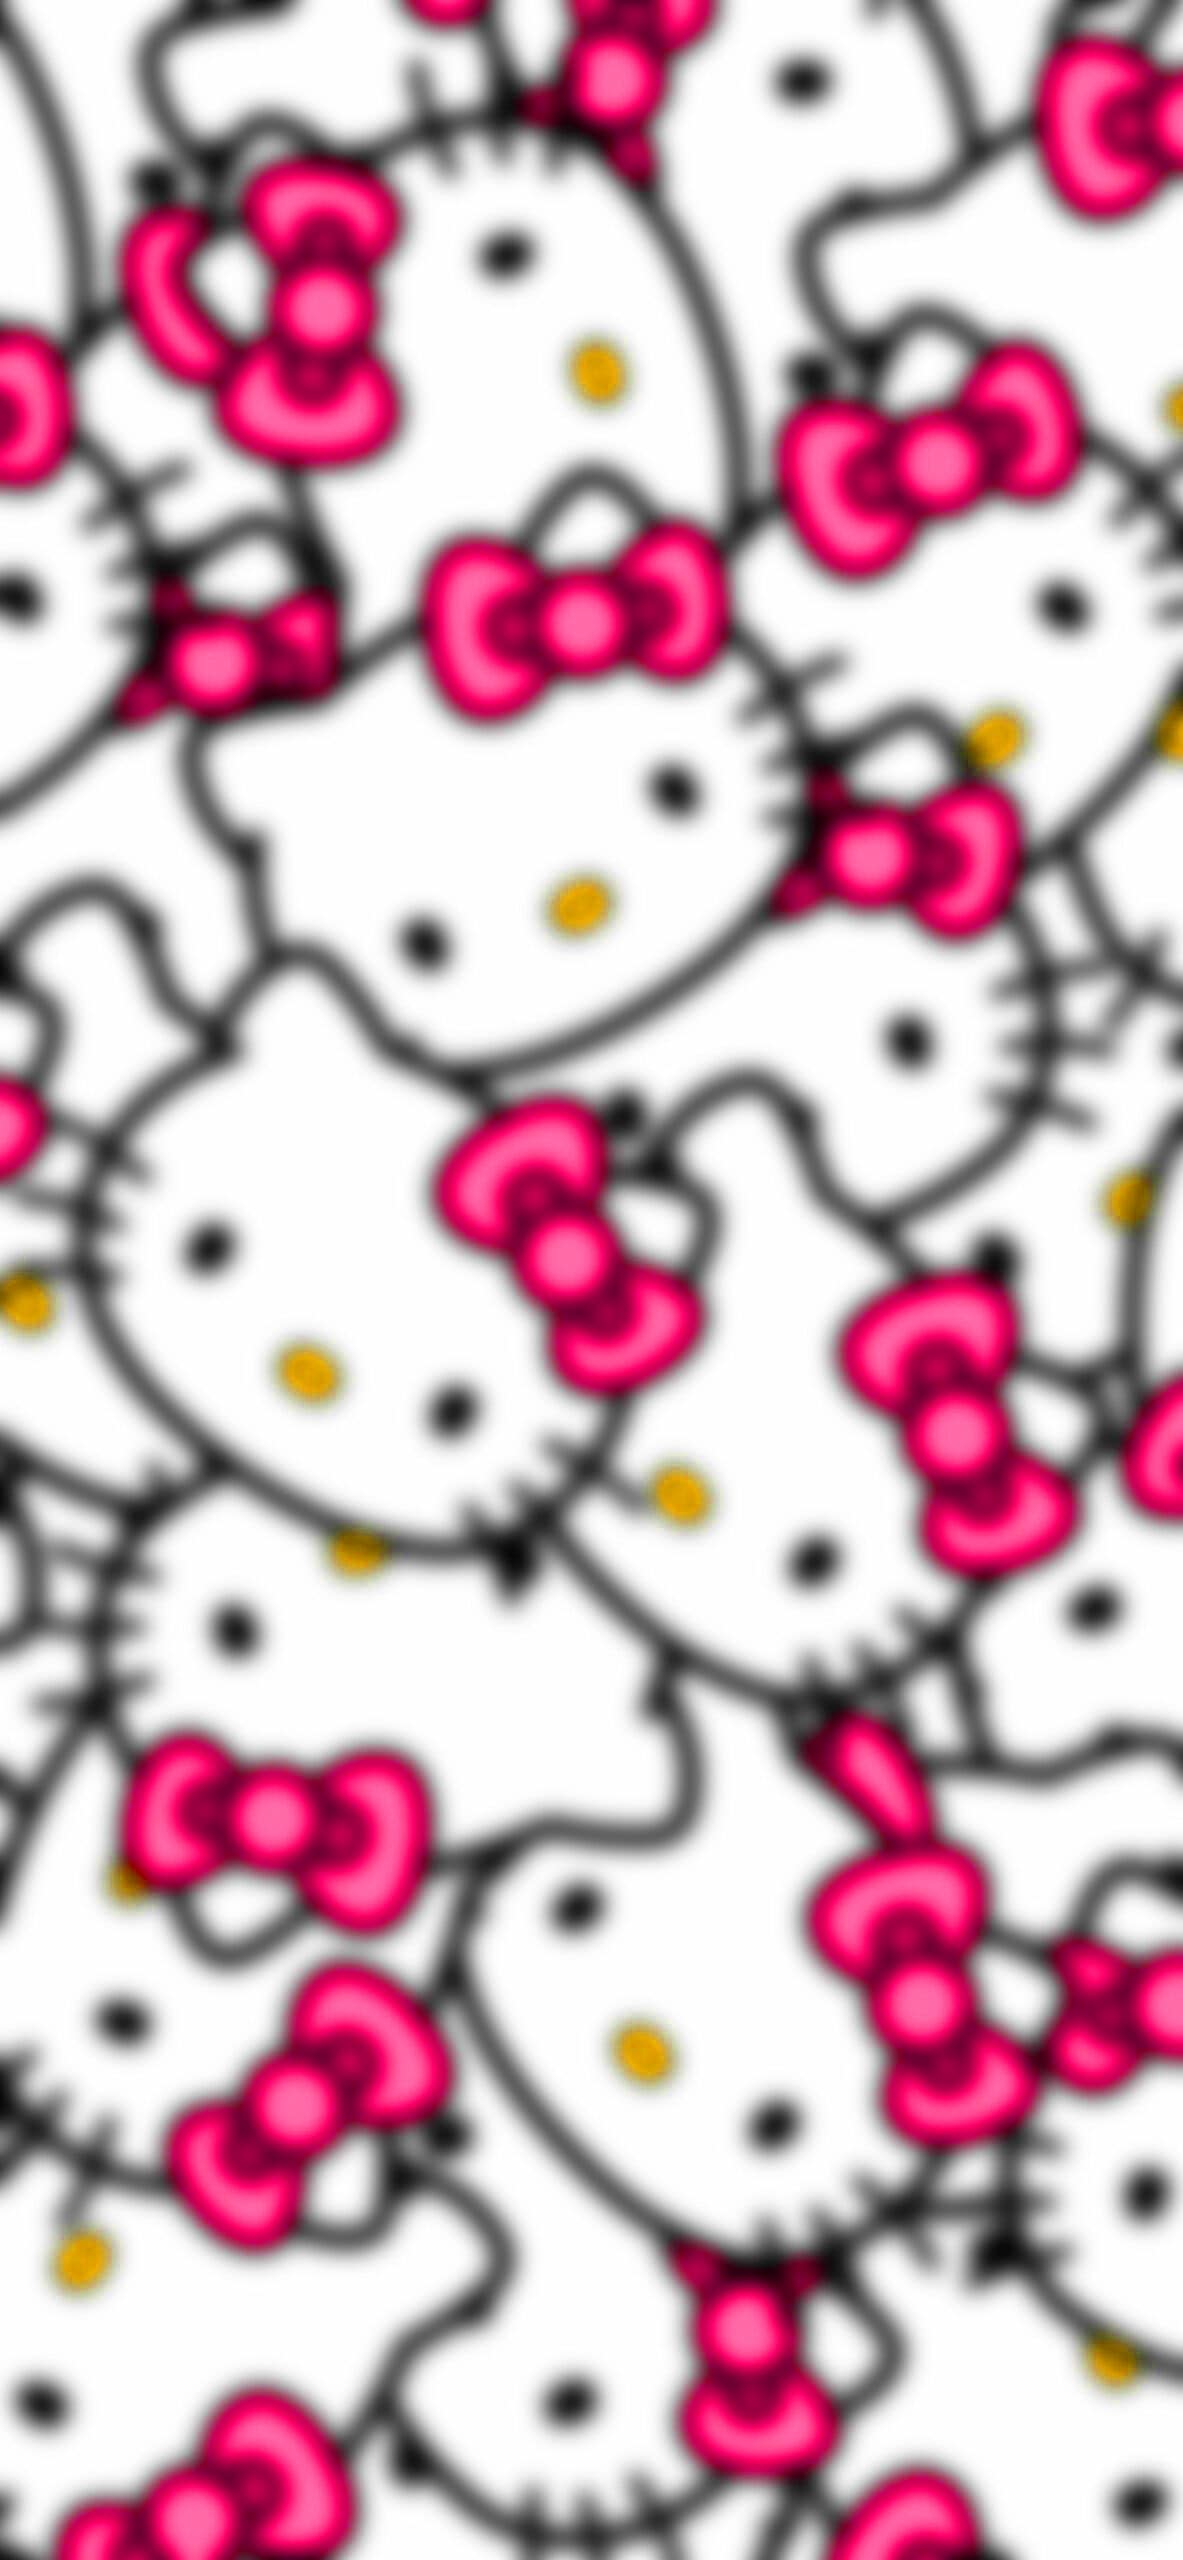 Hello Kitty Pattern wallpaper in 1024x768 resolution